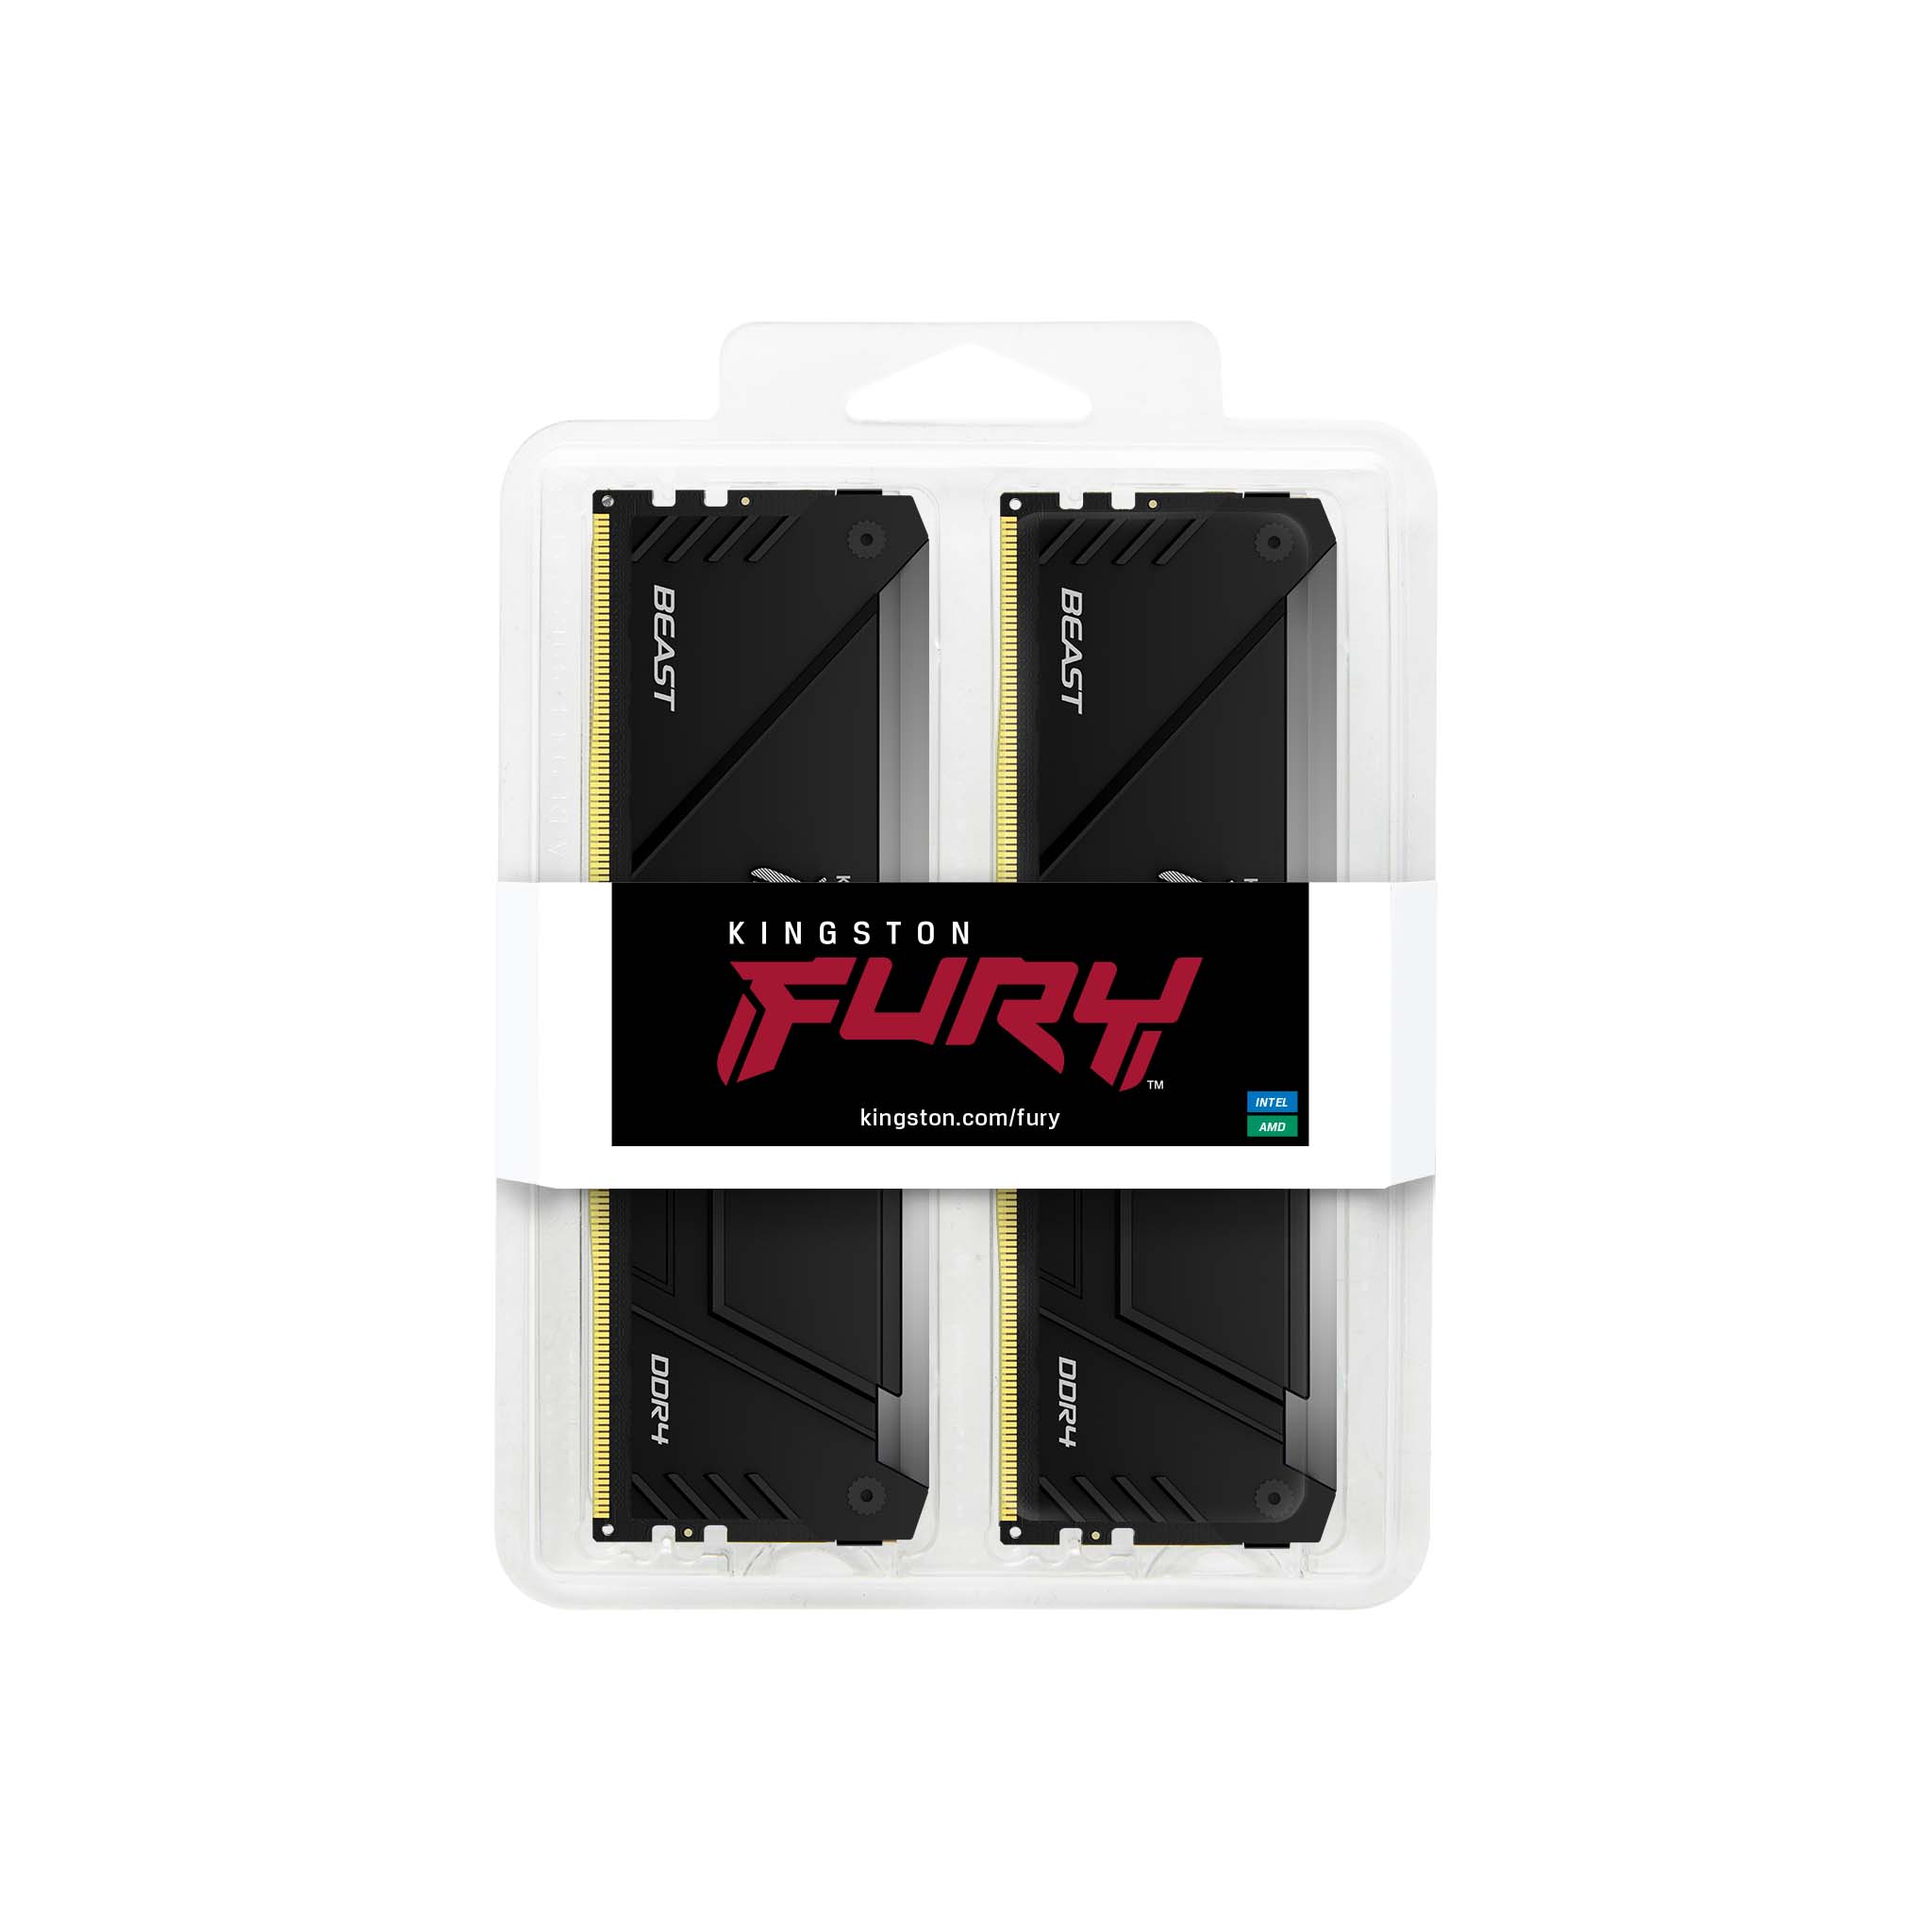 Kingston Fury Beast RGB 8Go (1x8Go) DDR4 3200MHz - Mémoire PC